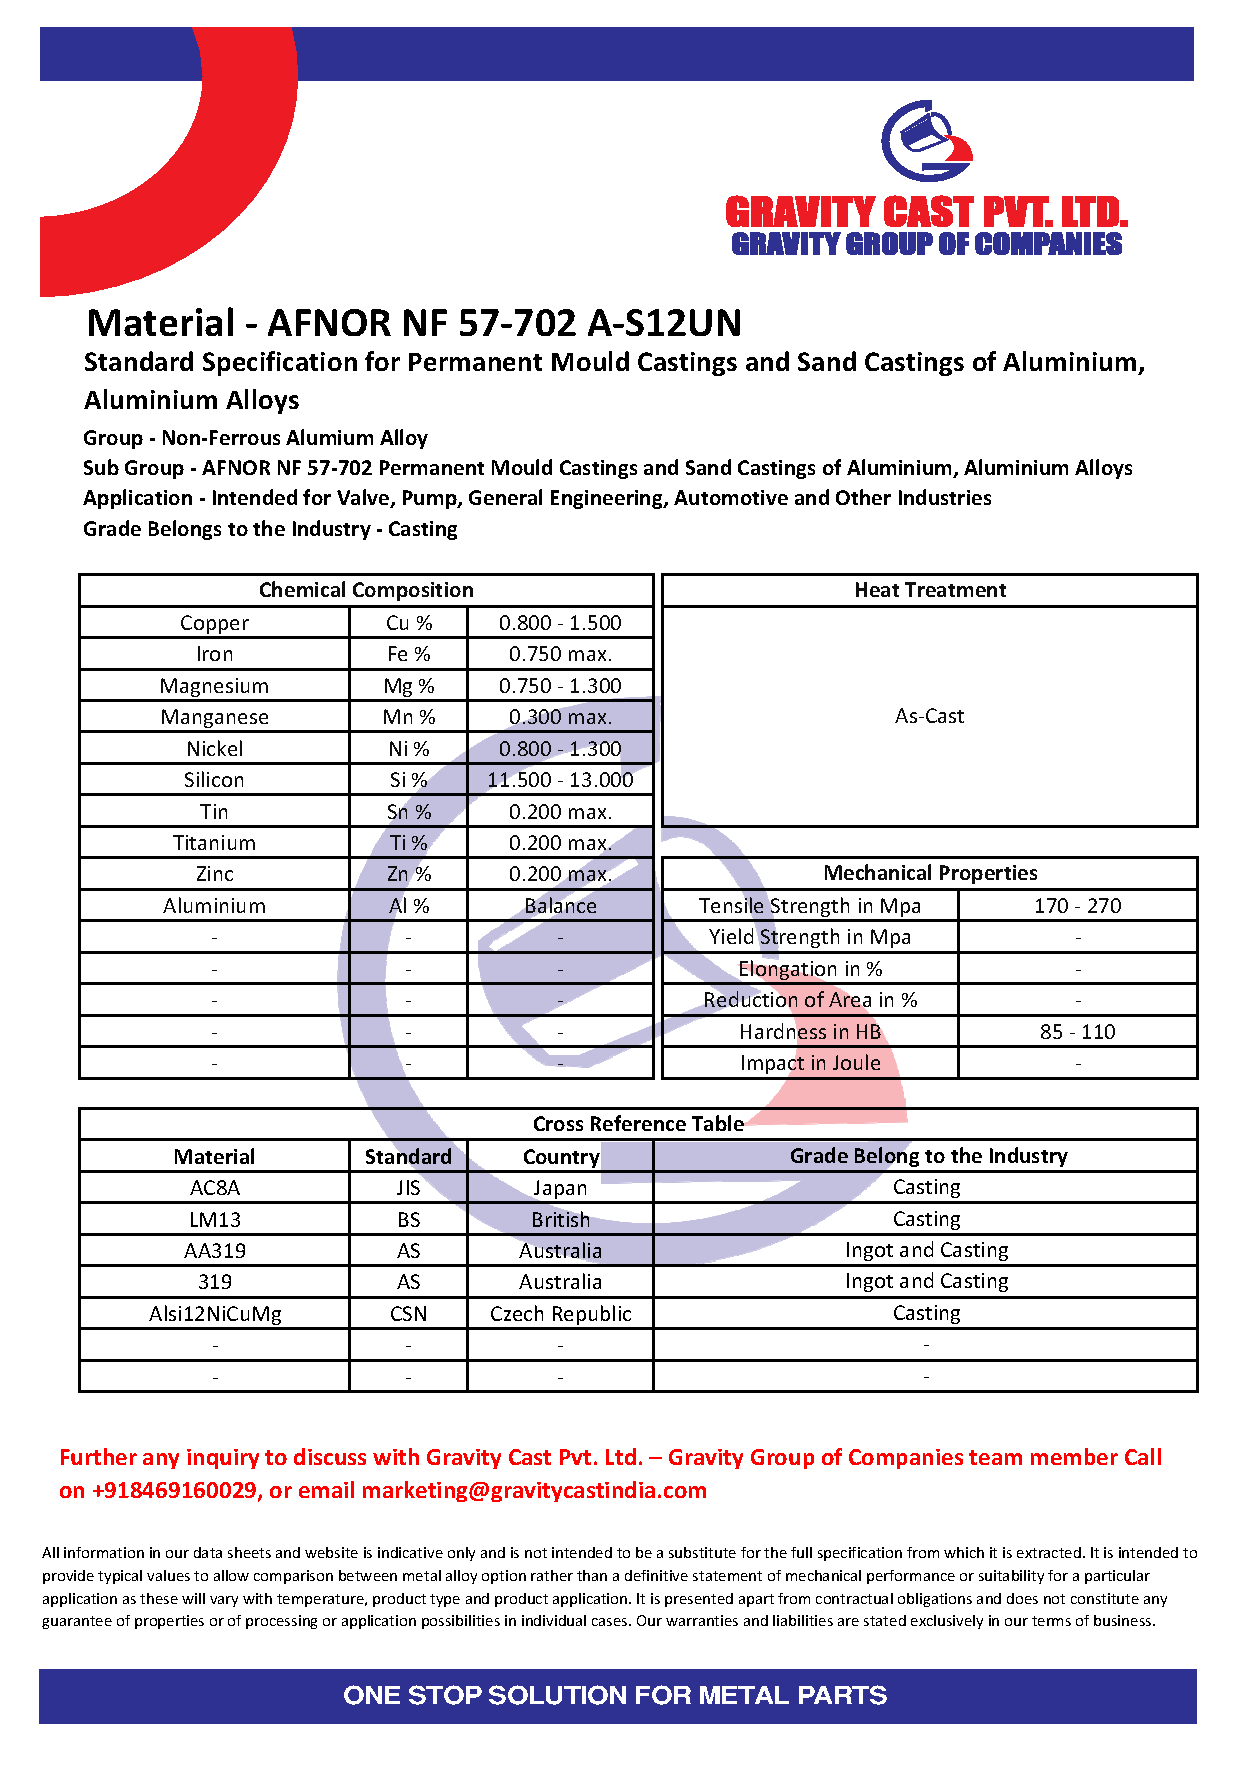 AFNOR NF 57-702 A-S12UN.pdf